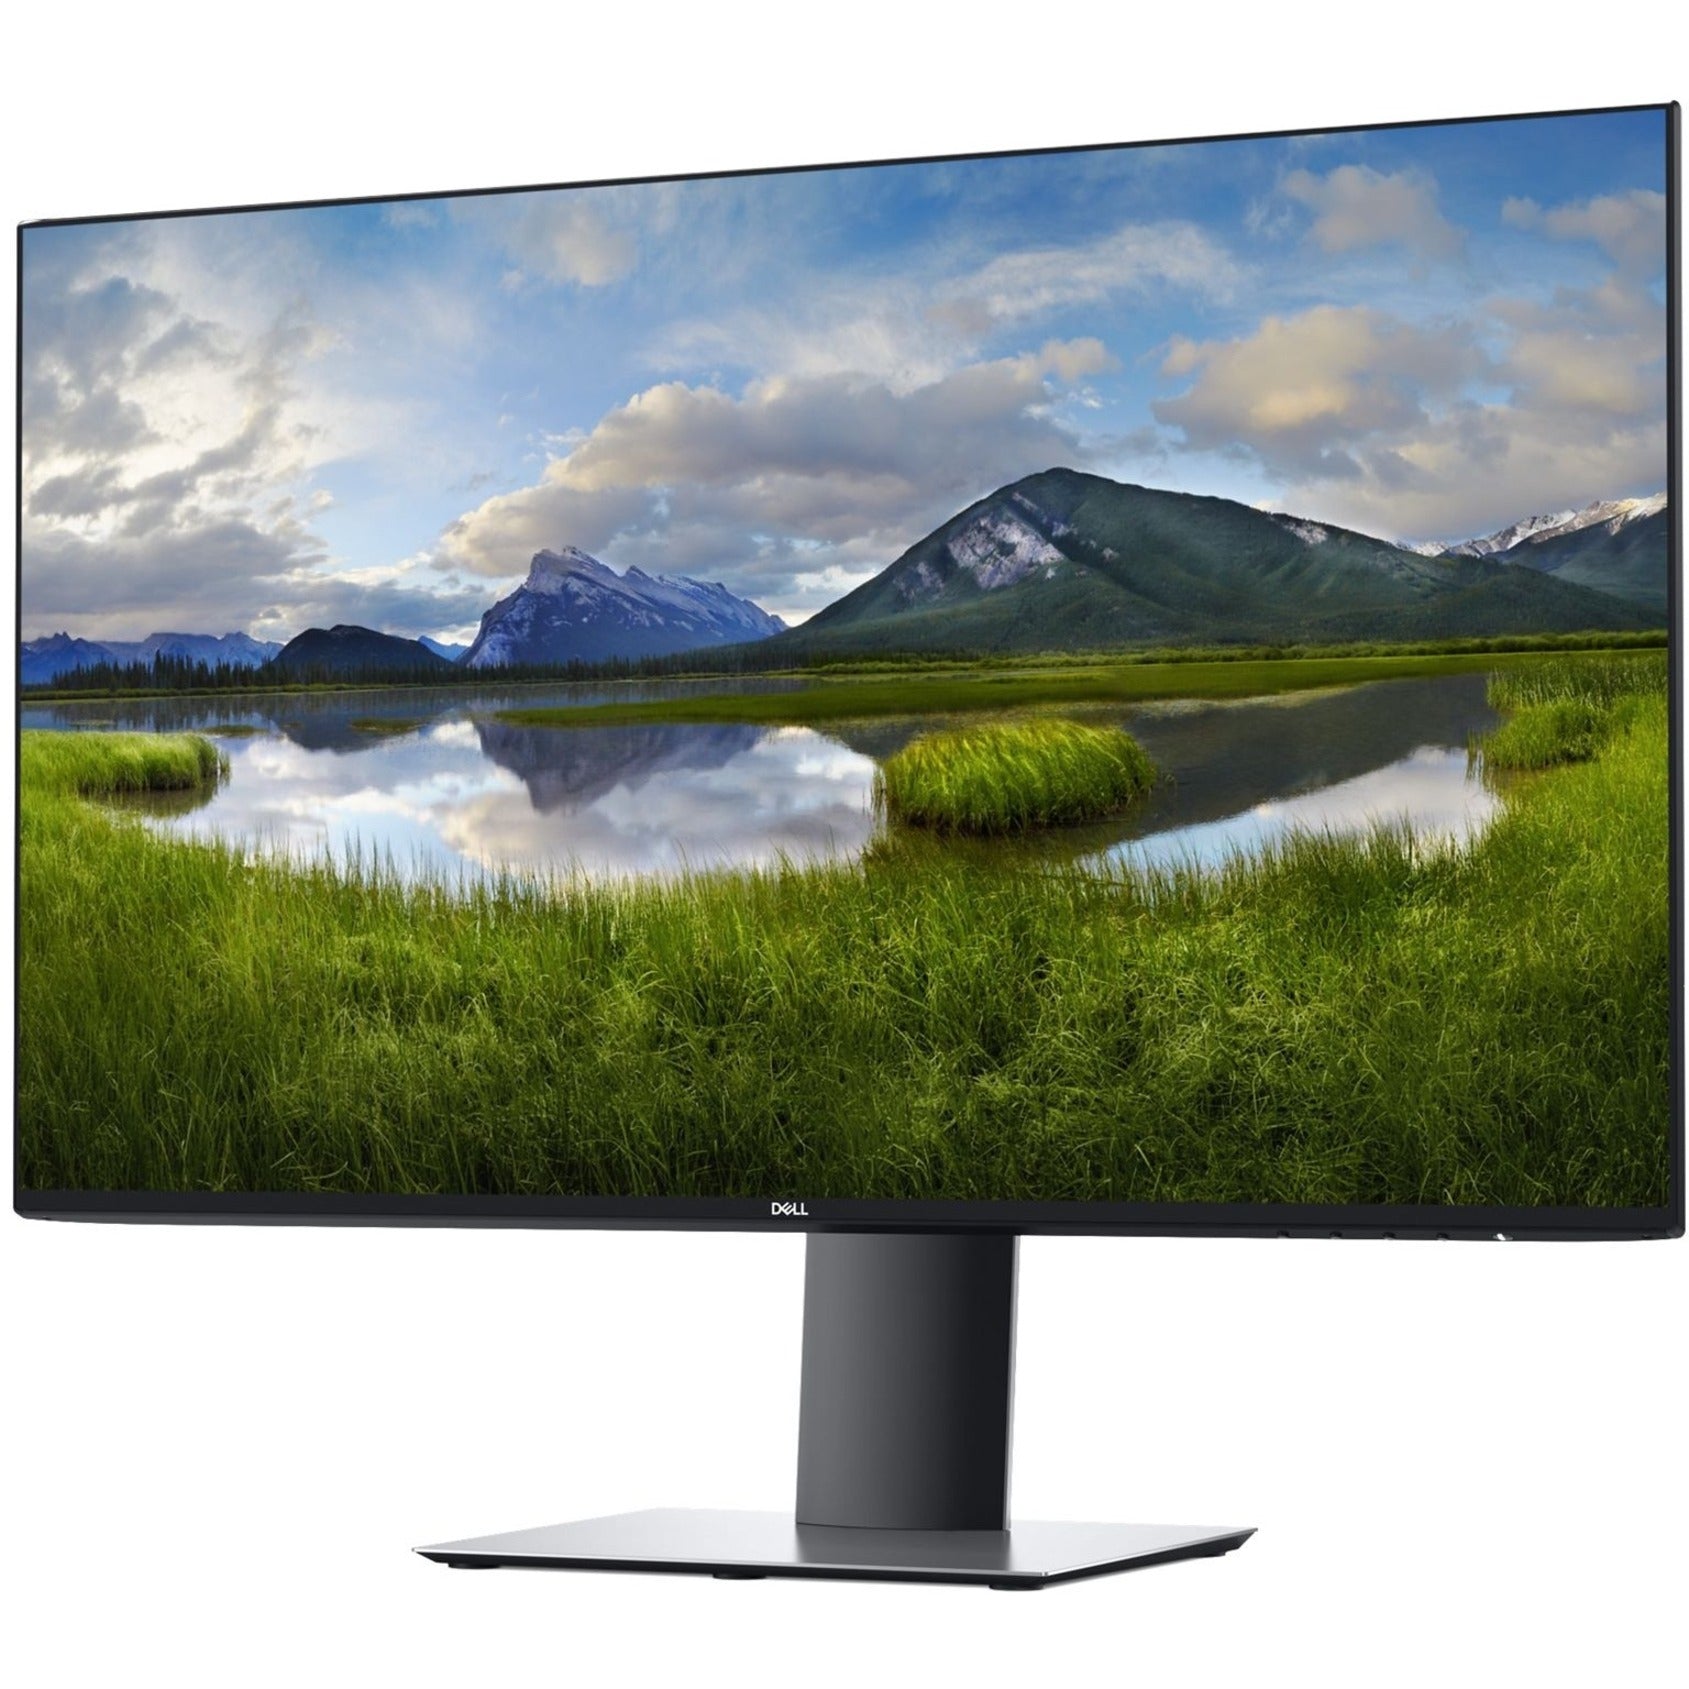 Dell DELL-U2719D UltraSharp U2719D Widescreen LCD Monitor, 27 LED, 2560 x 1440, 5ms Response Time, HDMI